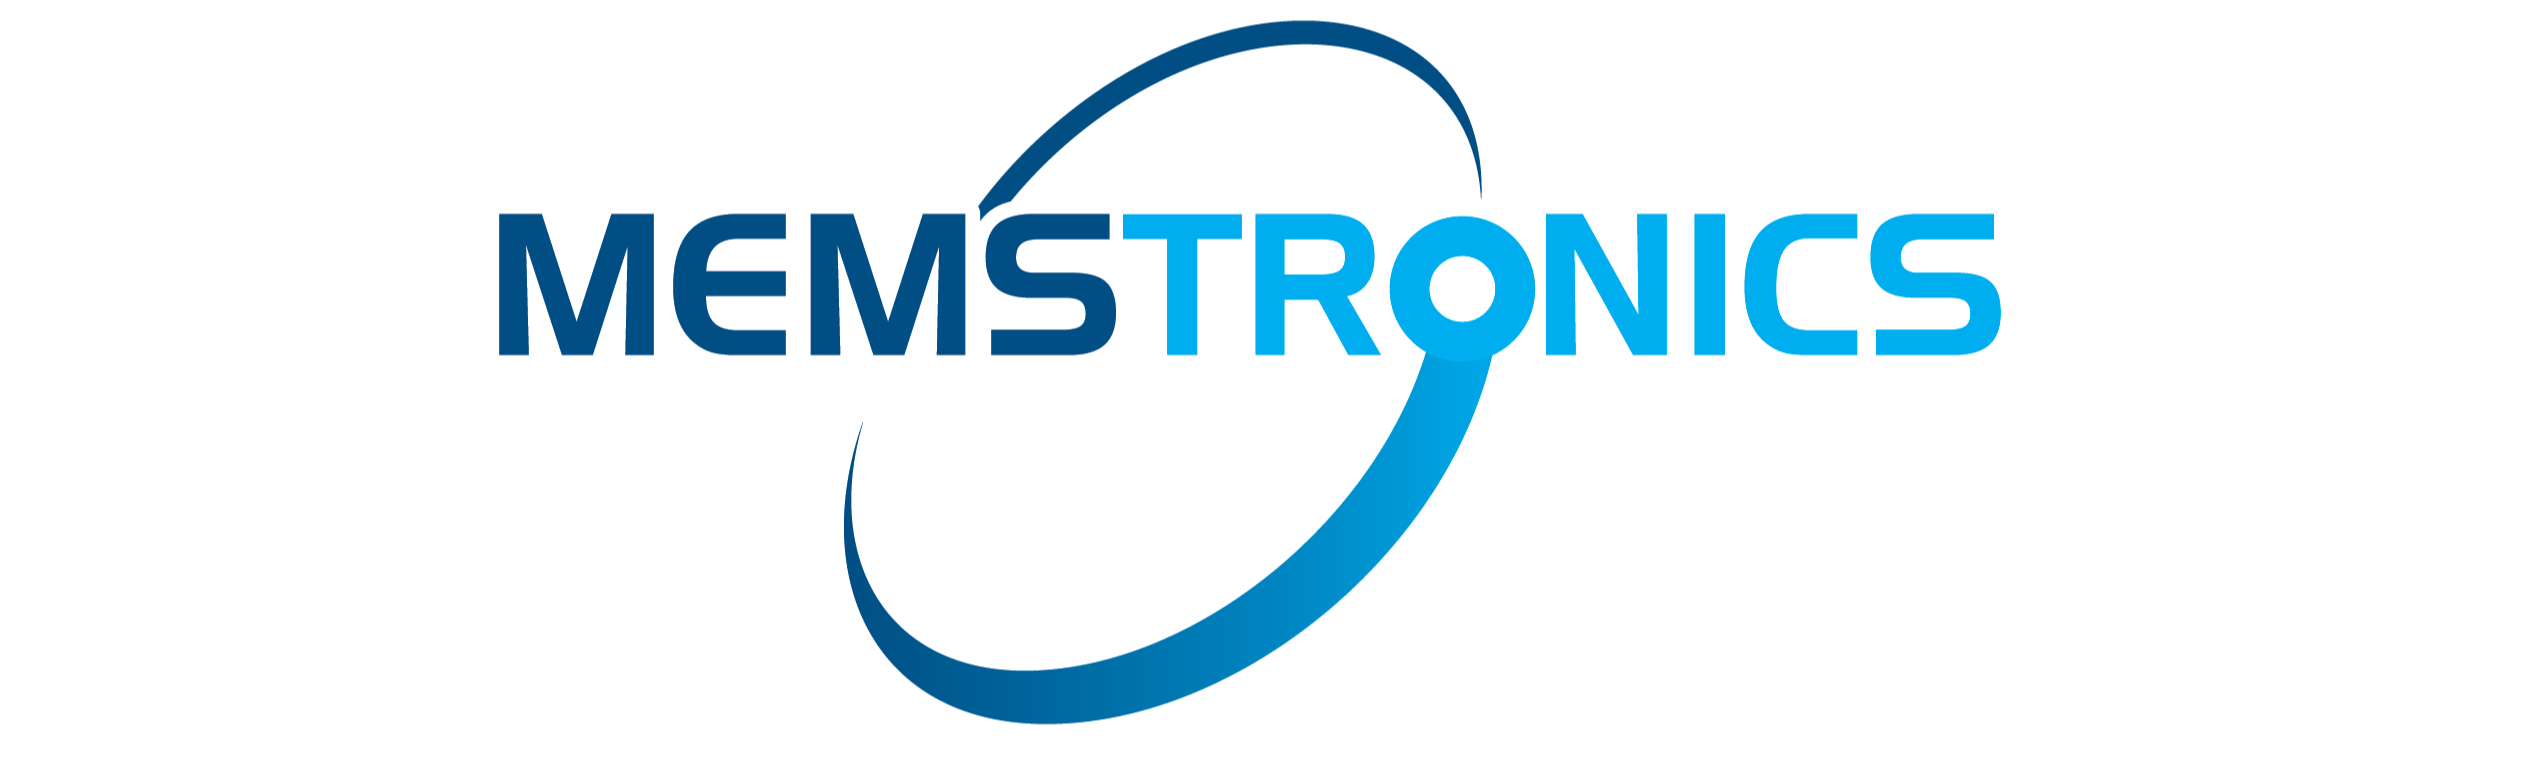 Memstronics logo